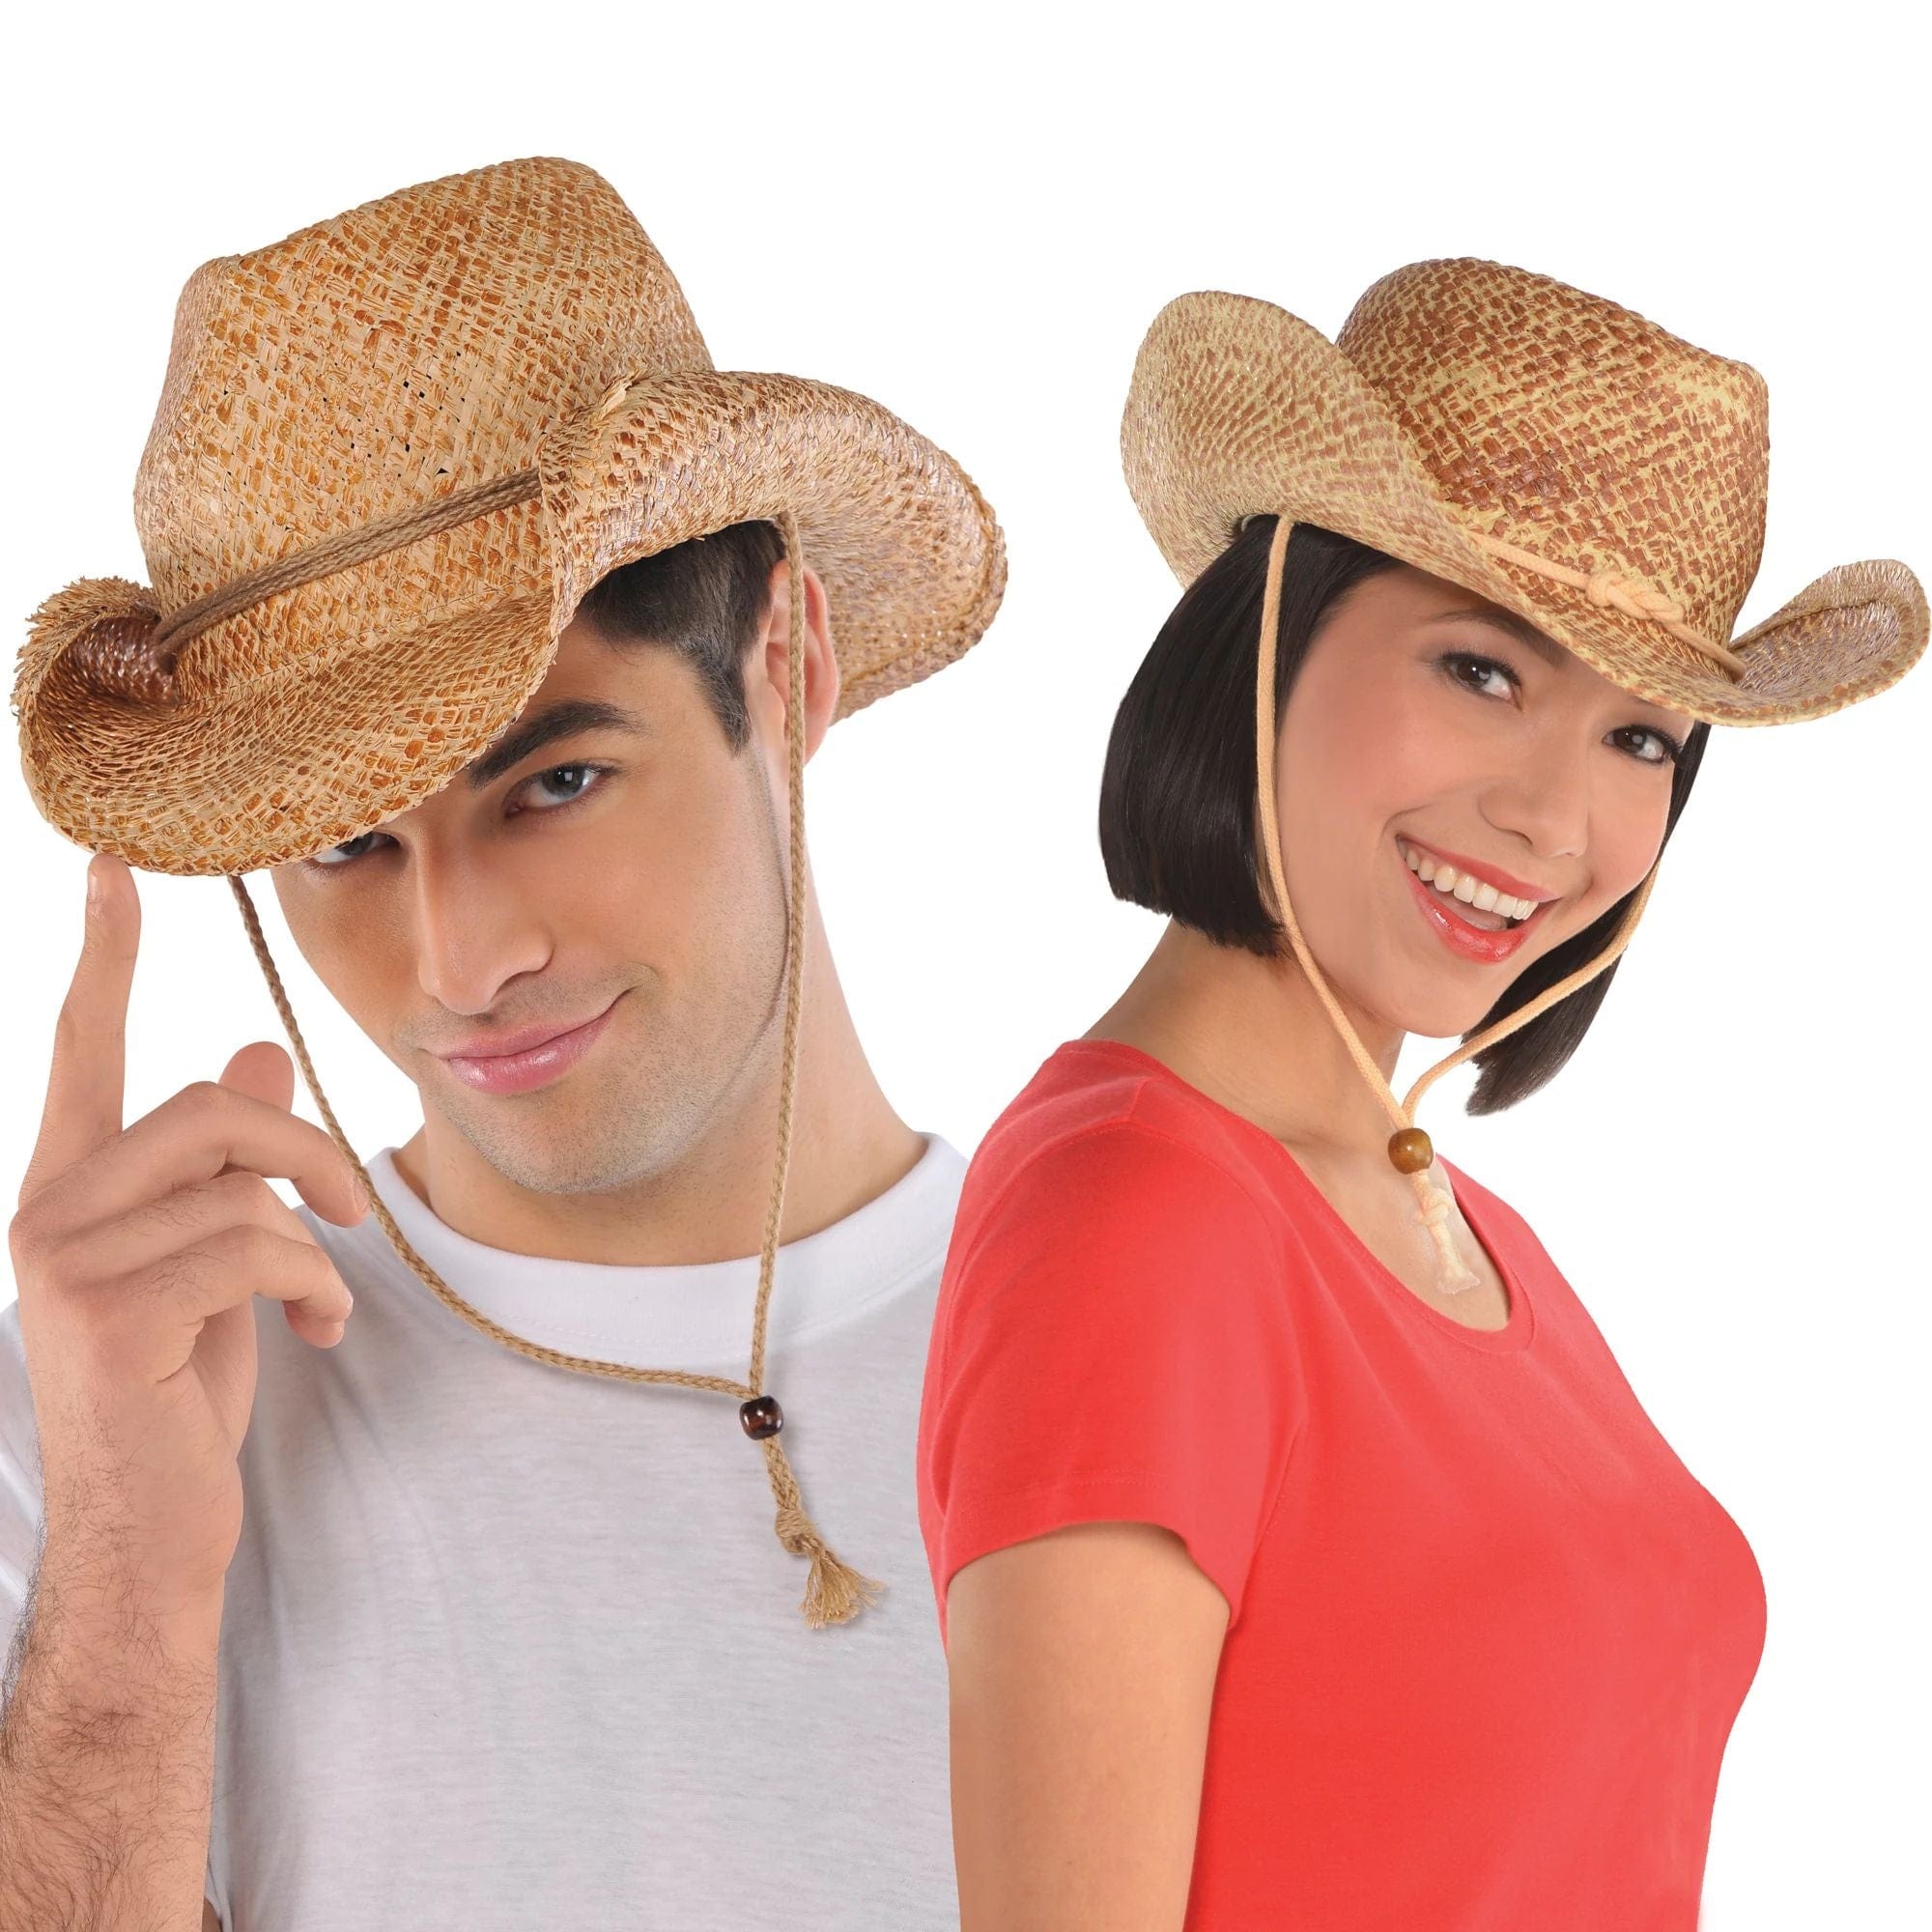 Amscan COSTUMES: HATS Straw Cowboy Hat